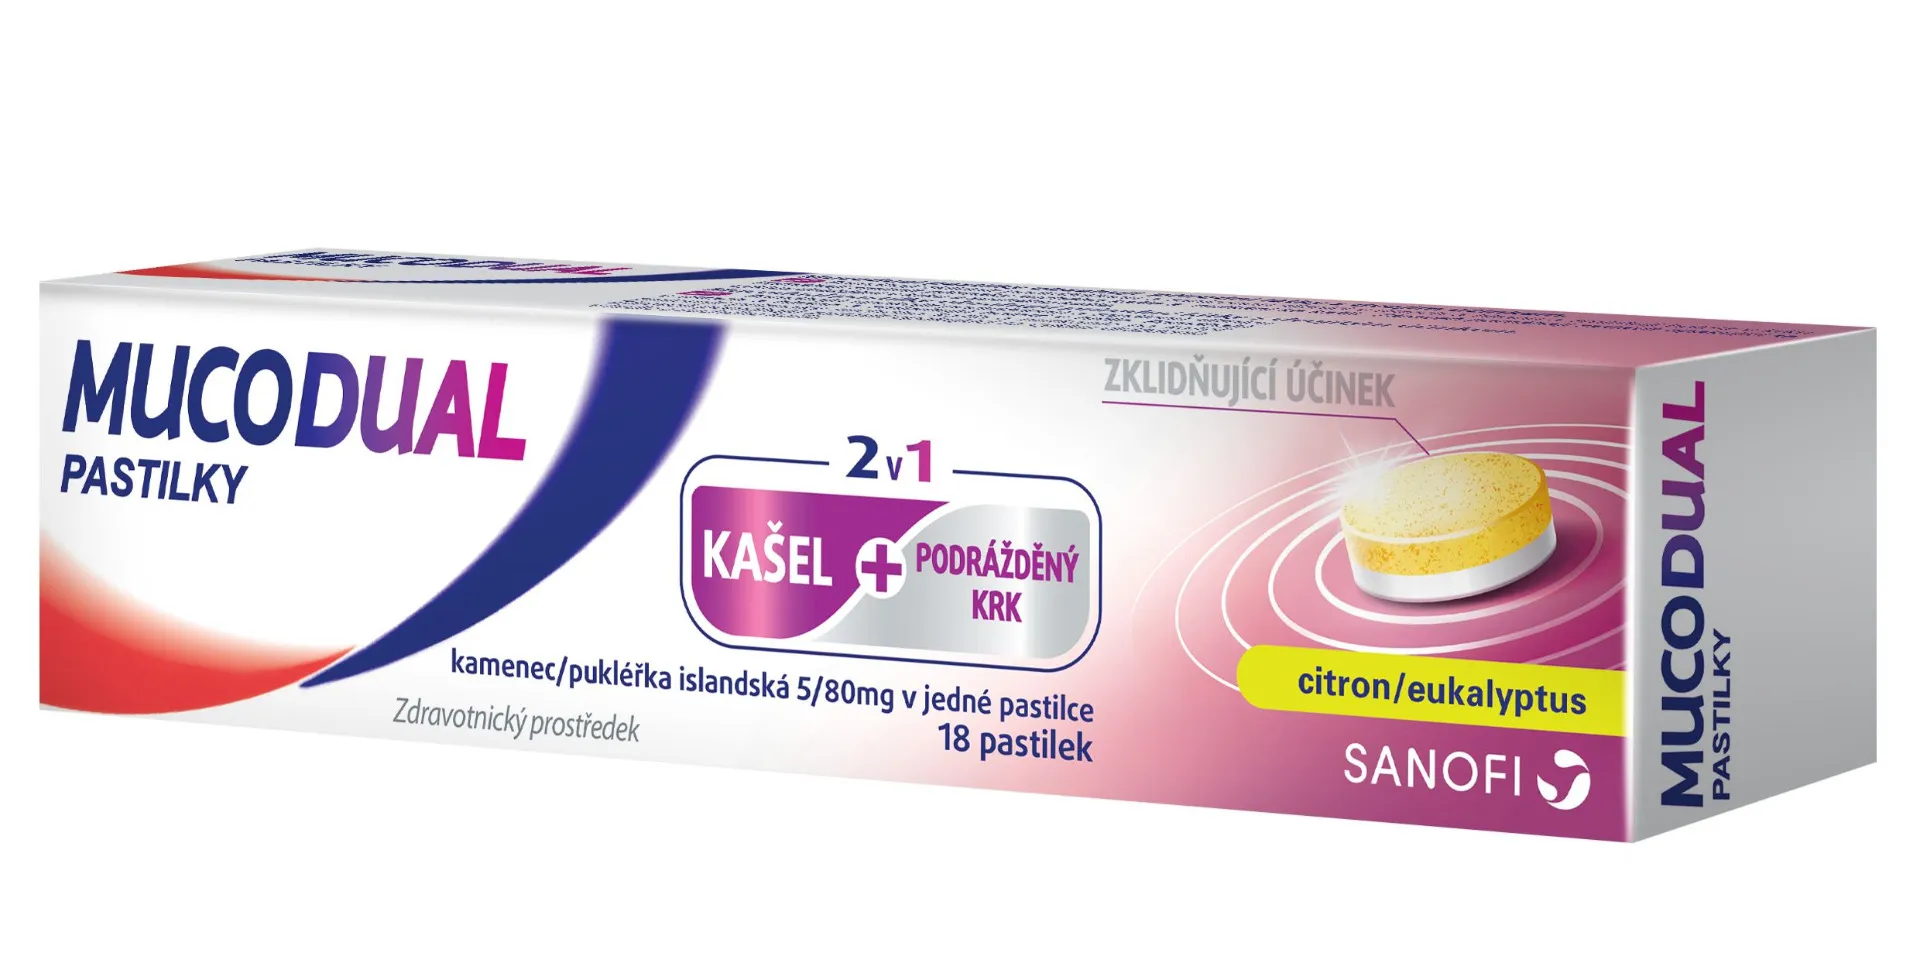 Mucodual 5/80 mg 18 pastilek